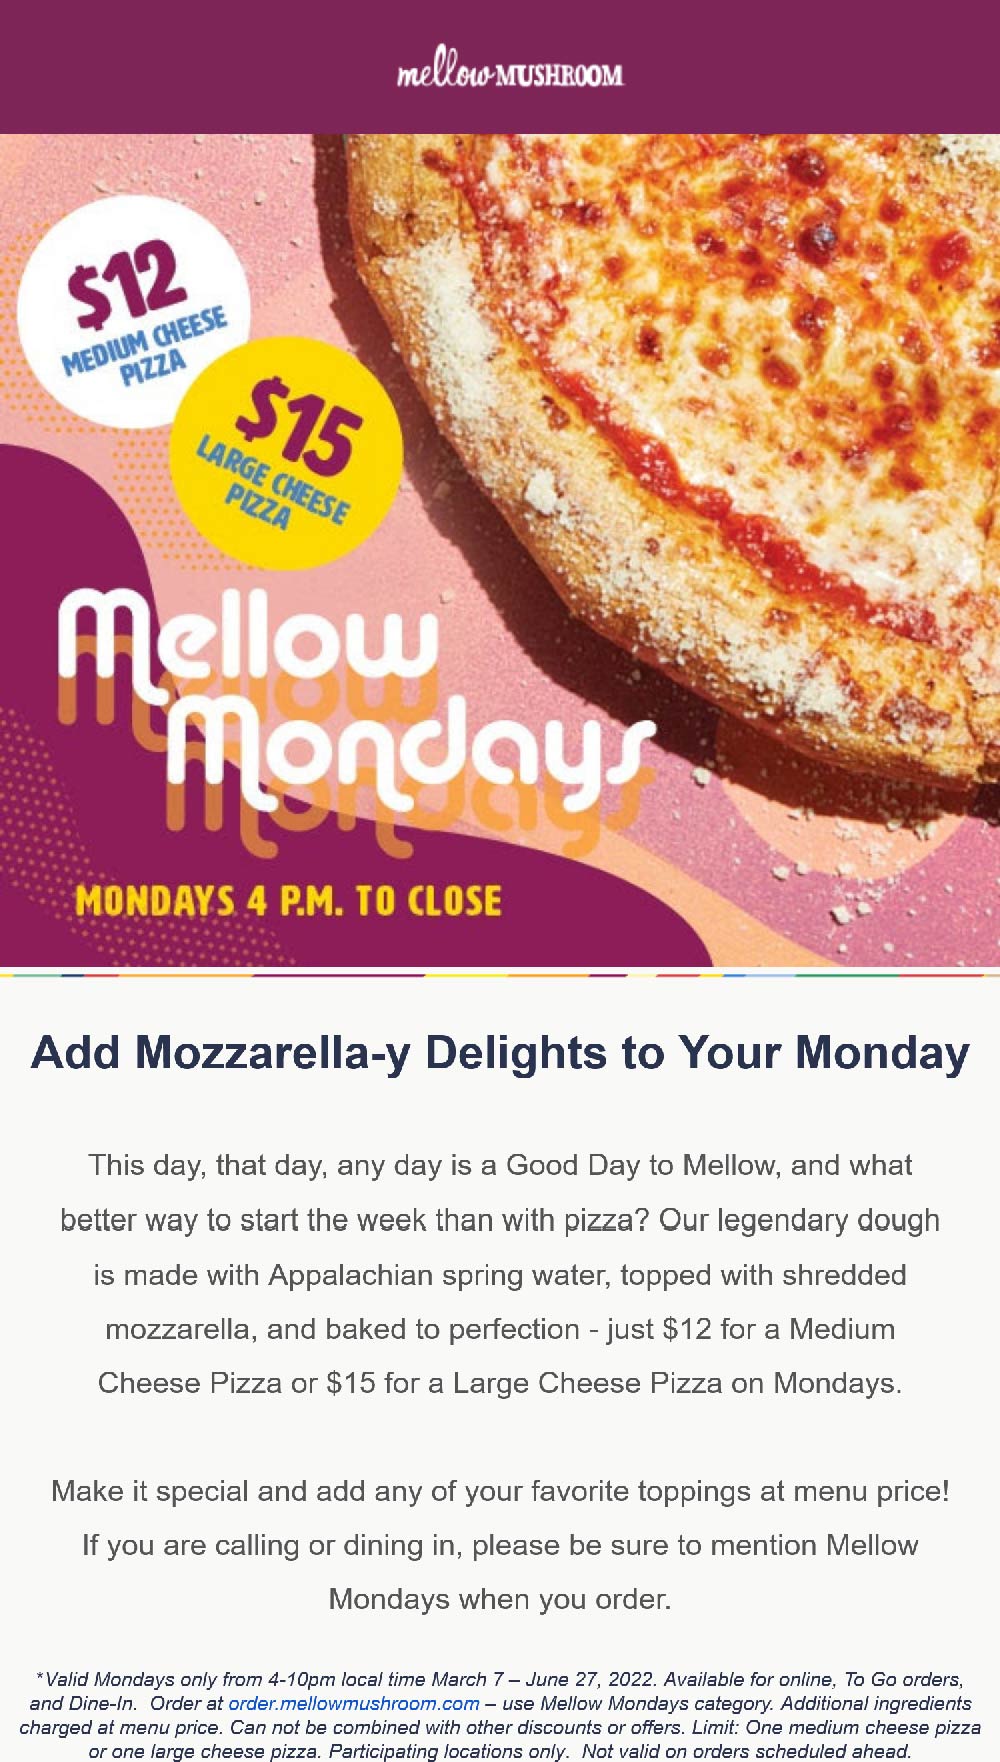 Mellow Mushroom restaurants Coupon  $15 large pizza Mondays after 4p at Mellow Mushroom #mellowmushroom 